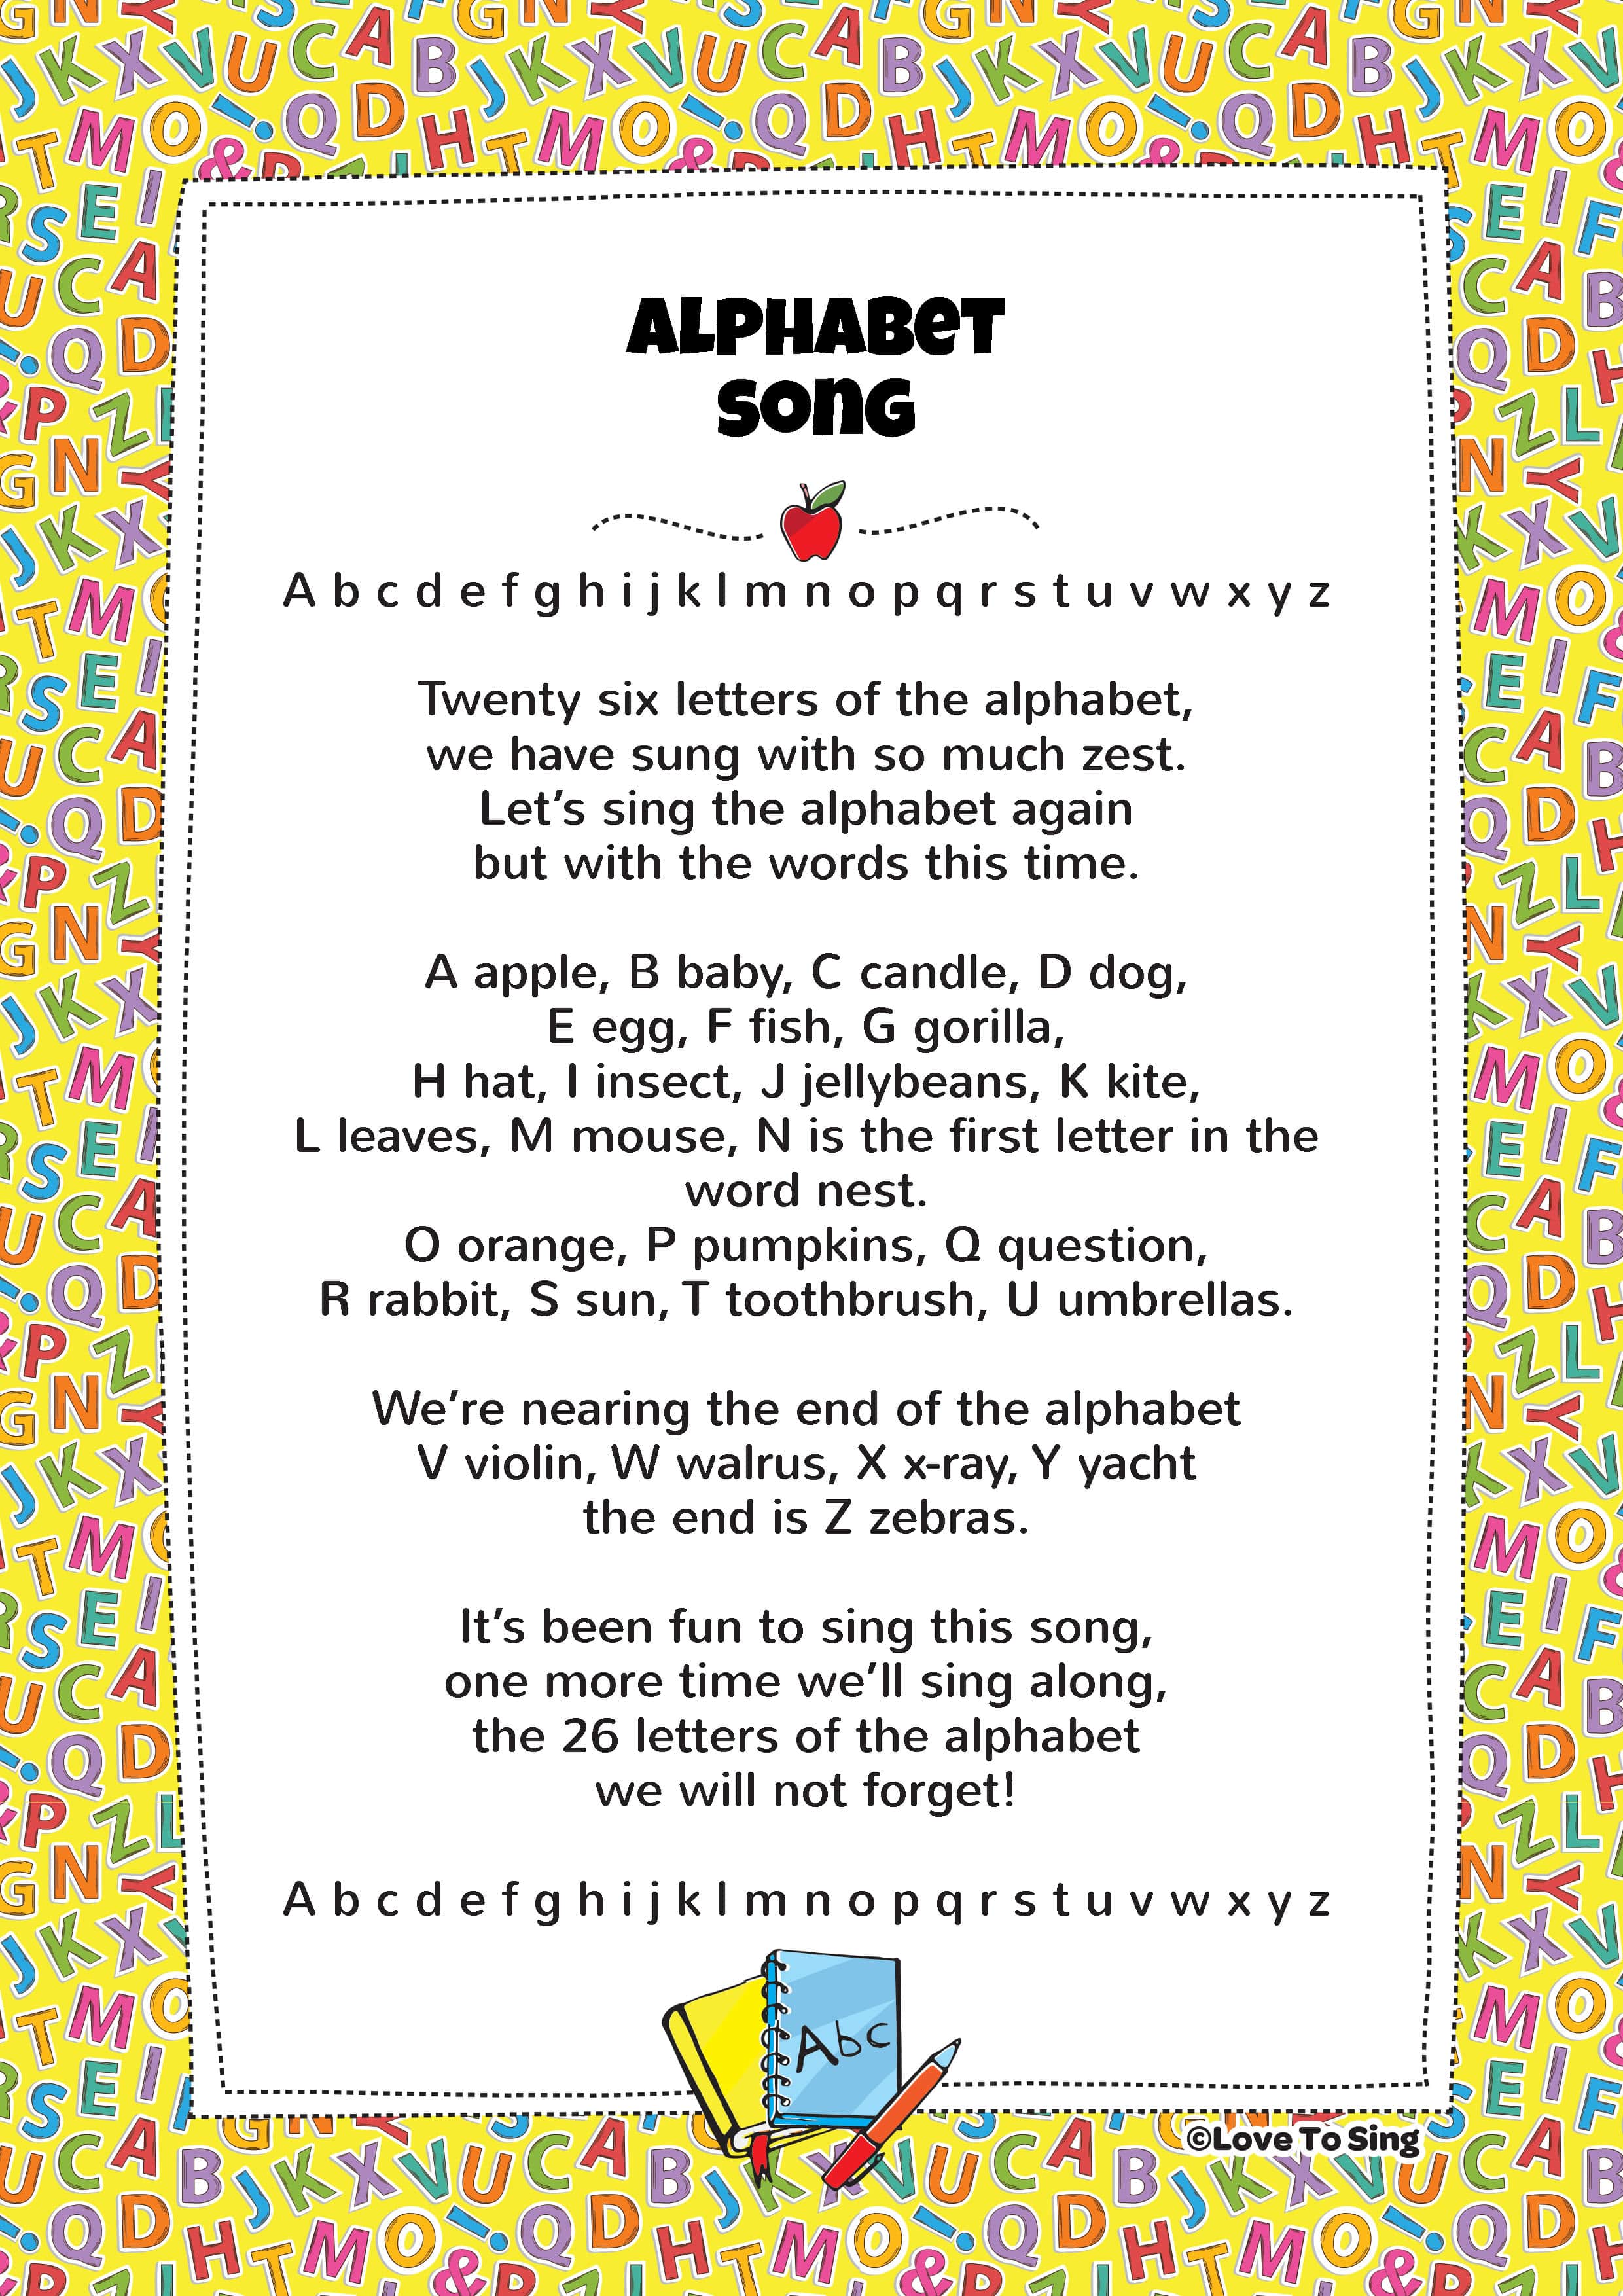 ABC Alphabet Song | FREE video song, lyrics & activity ideas